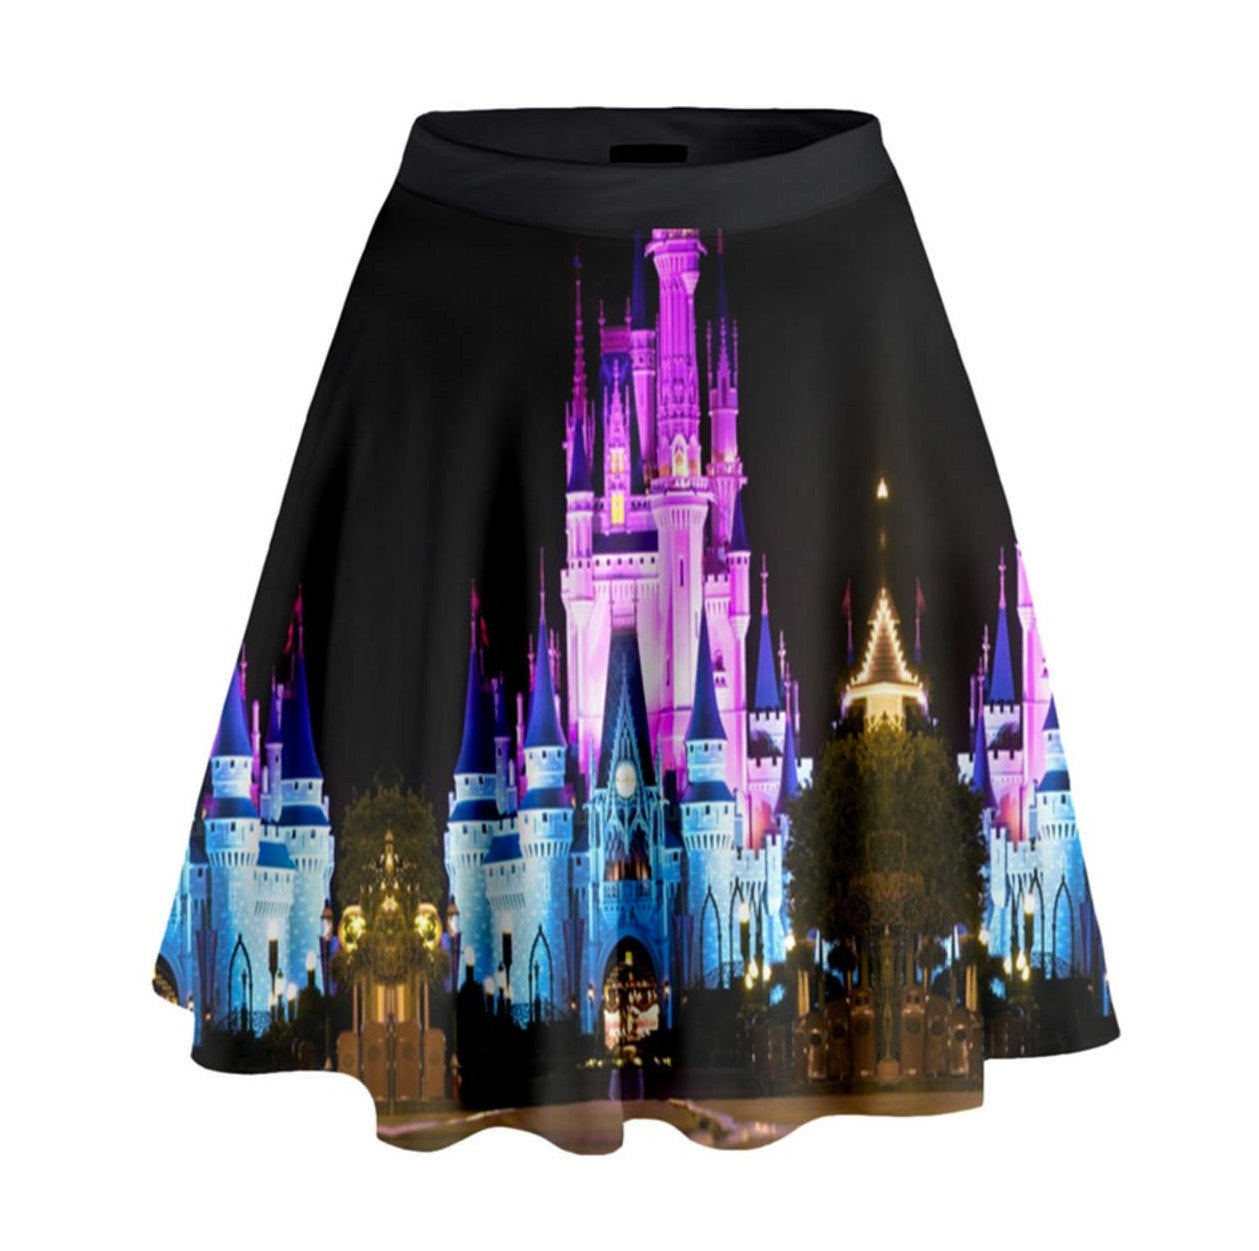 Nighttime Cinderella Castle Inspired High Waisted Skirt